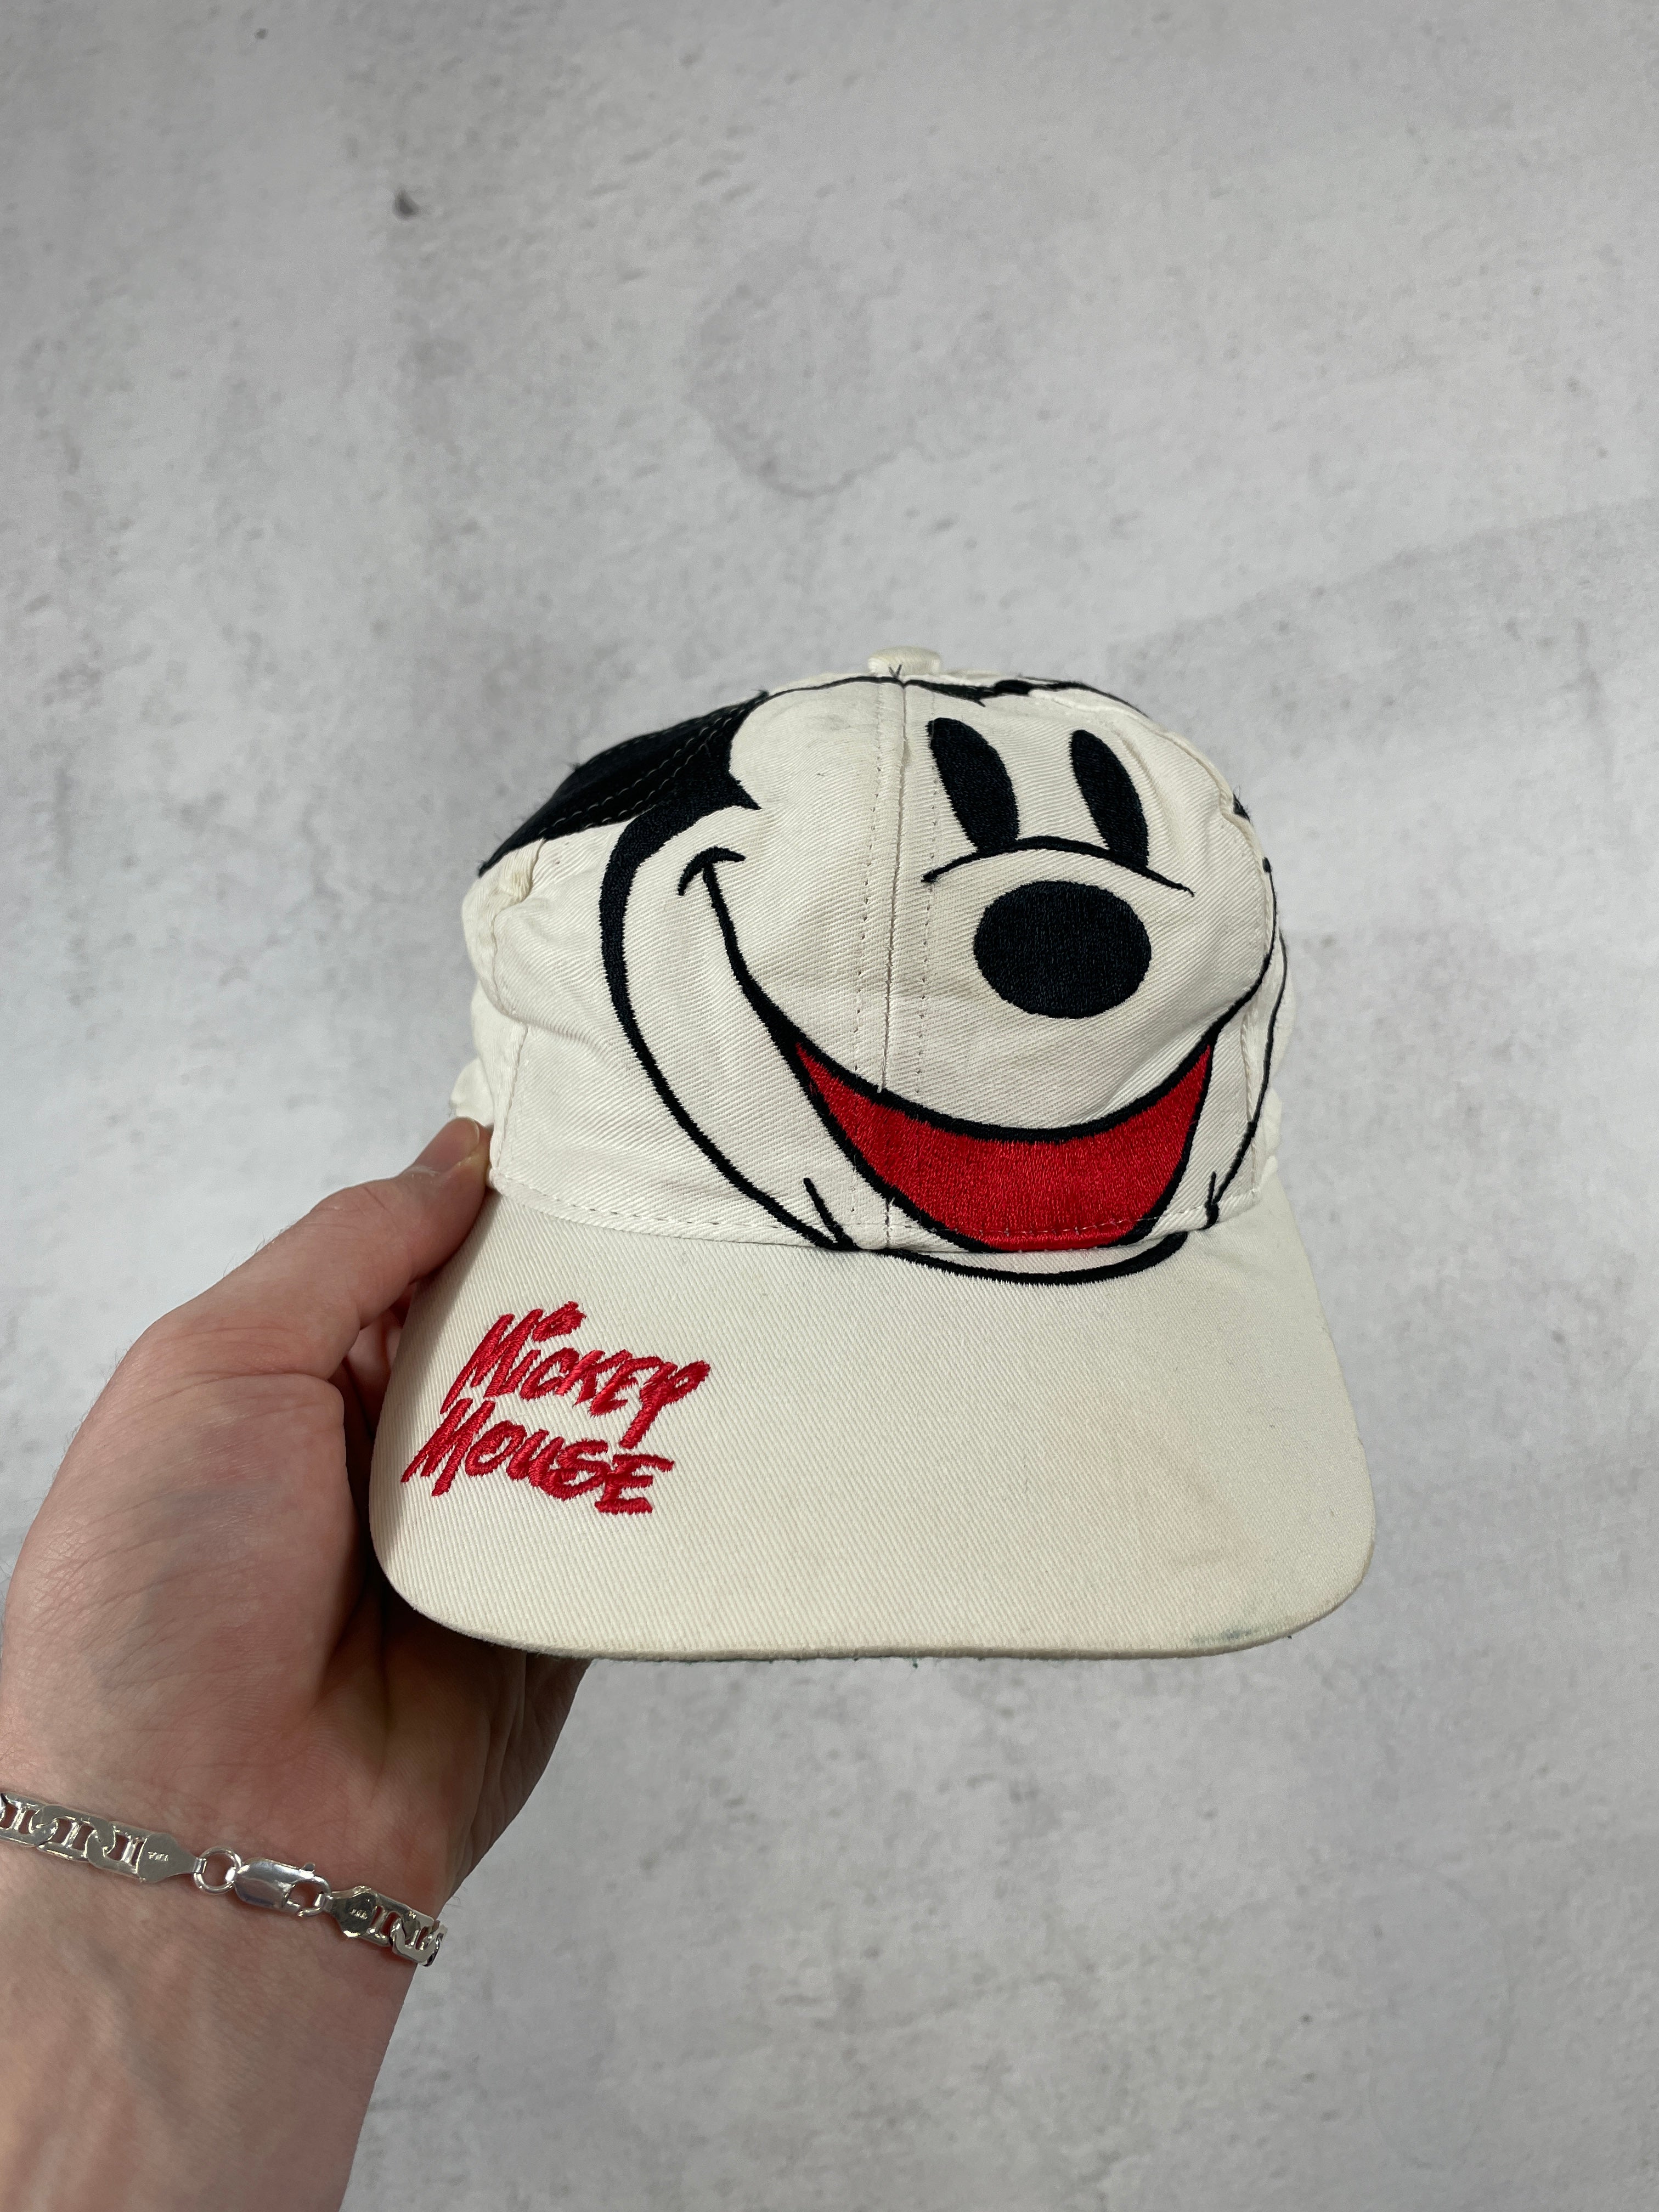 Vintage Disney Micky Mouse Snap-Back Hat - Adjustable